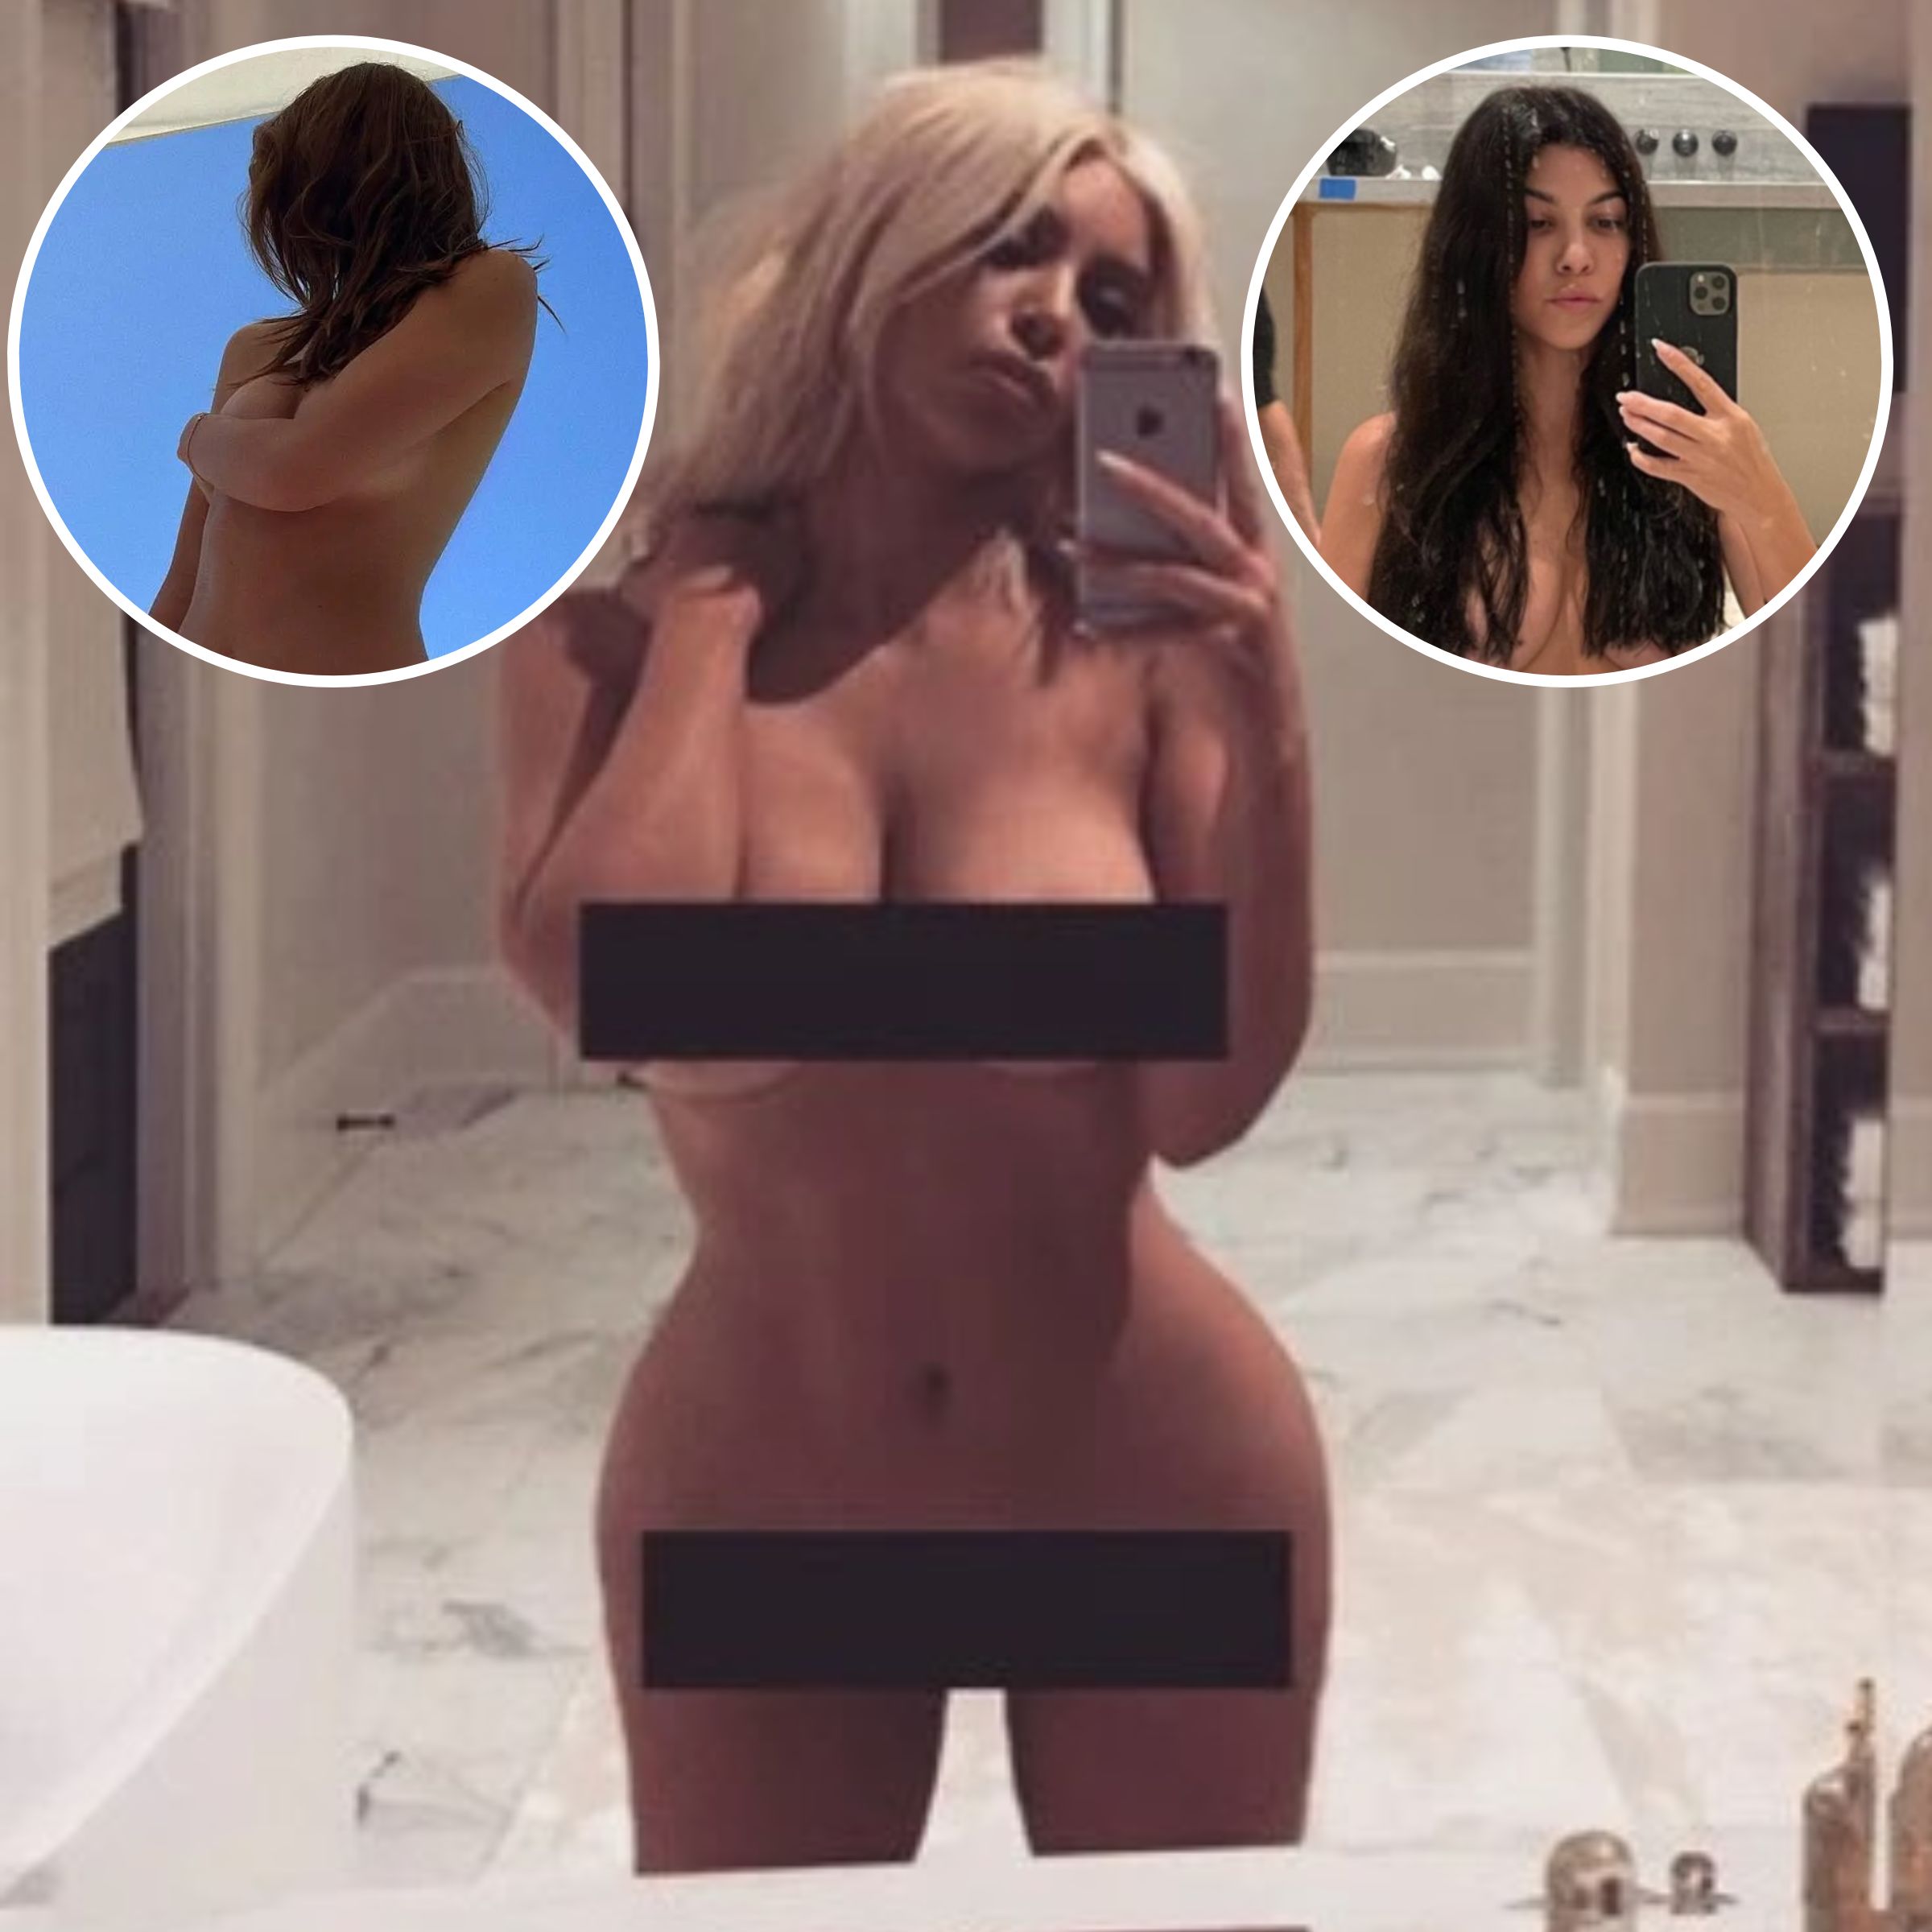 blake schafer recommends the kardashian girls naked pic